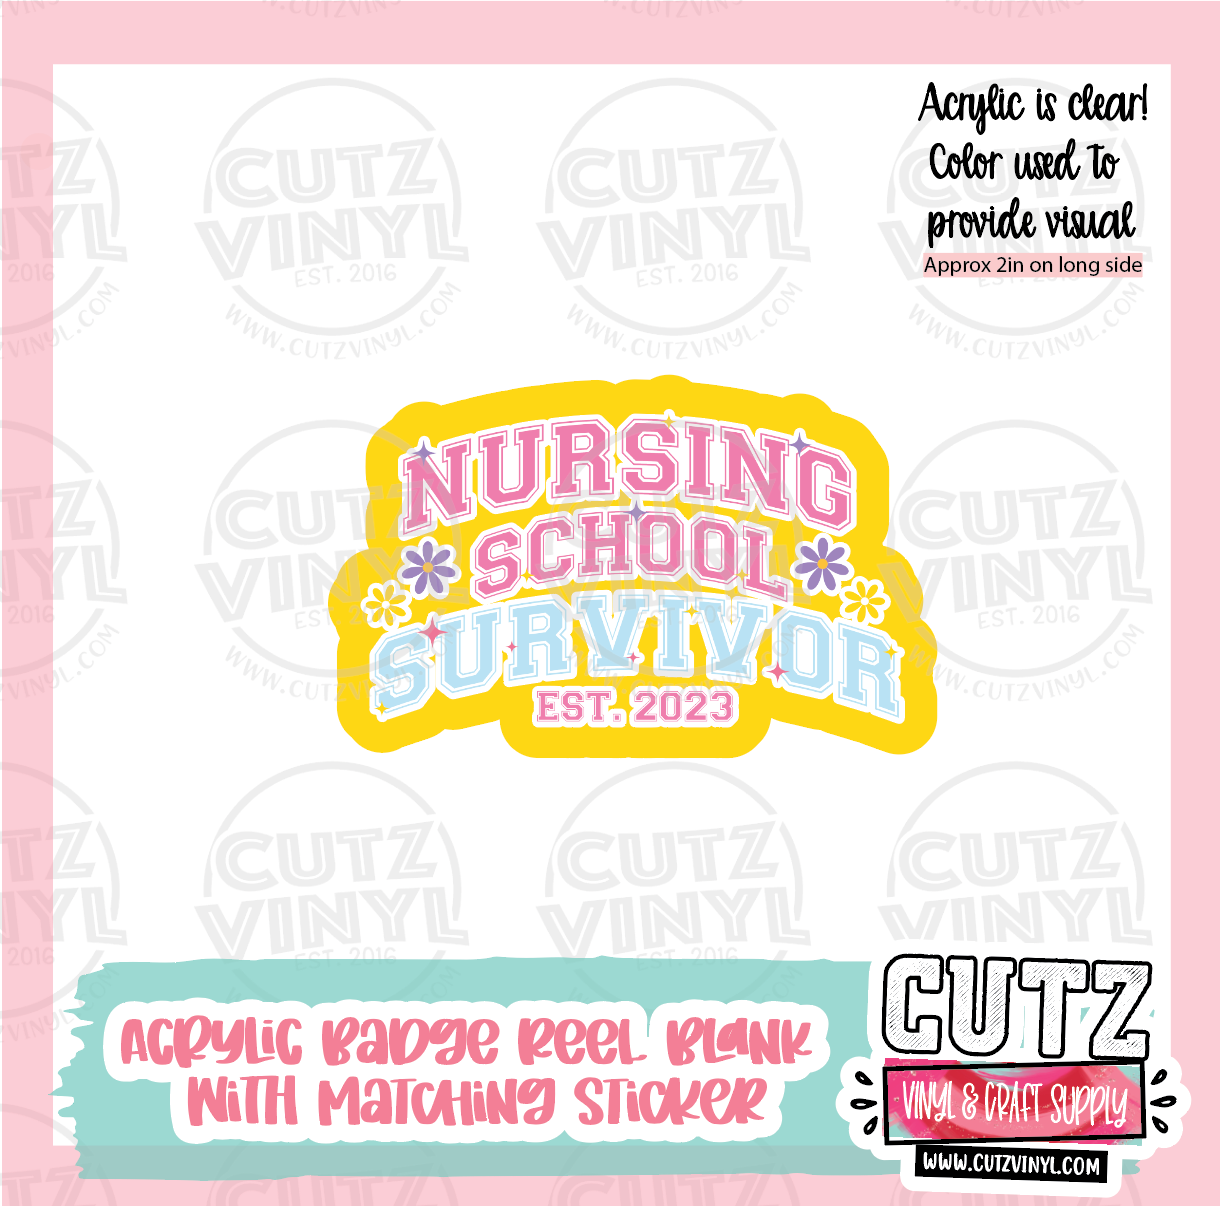 Nursing School Survivor - Acrylic Badge Reel Blank and Matching